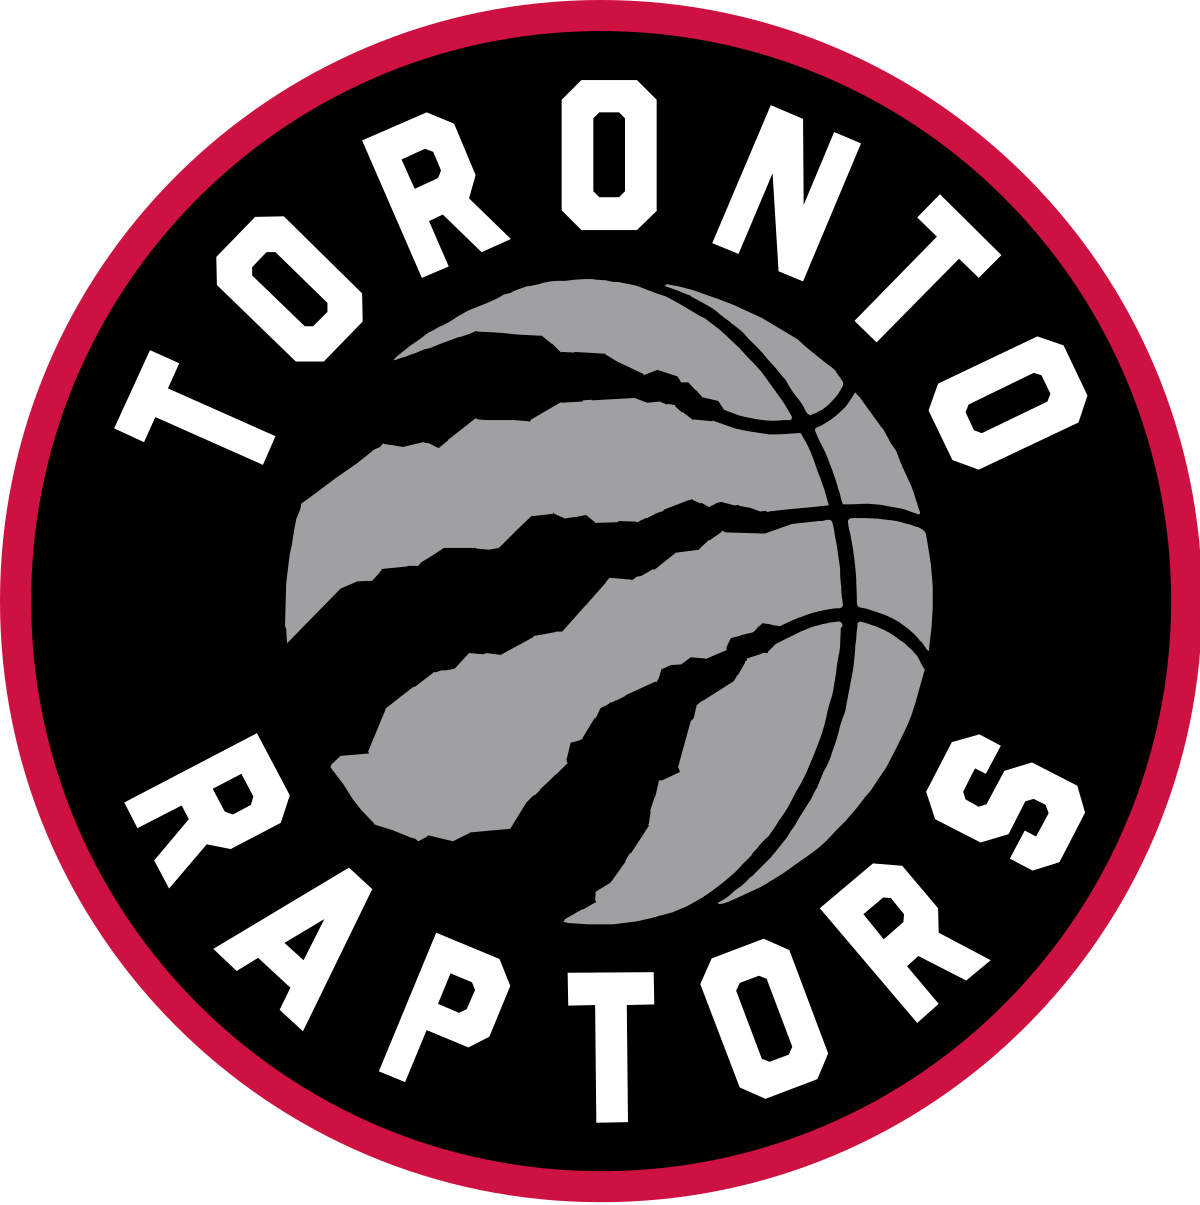 1. 多倫多猛龍 Toronto Raptors 